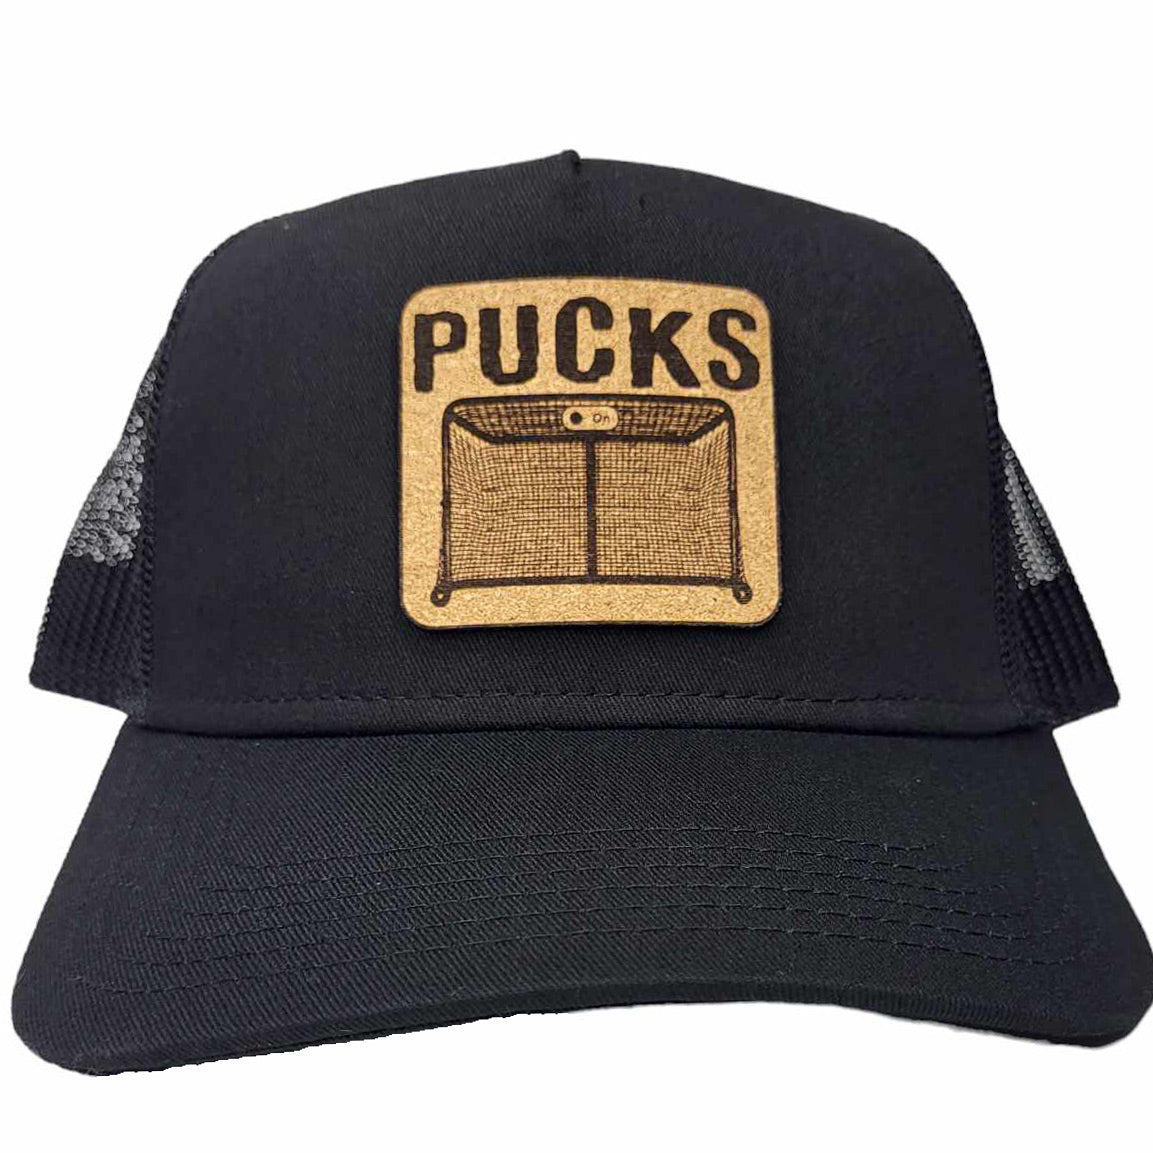 Pucks On Net Hat